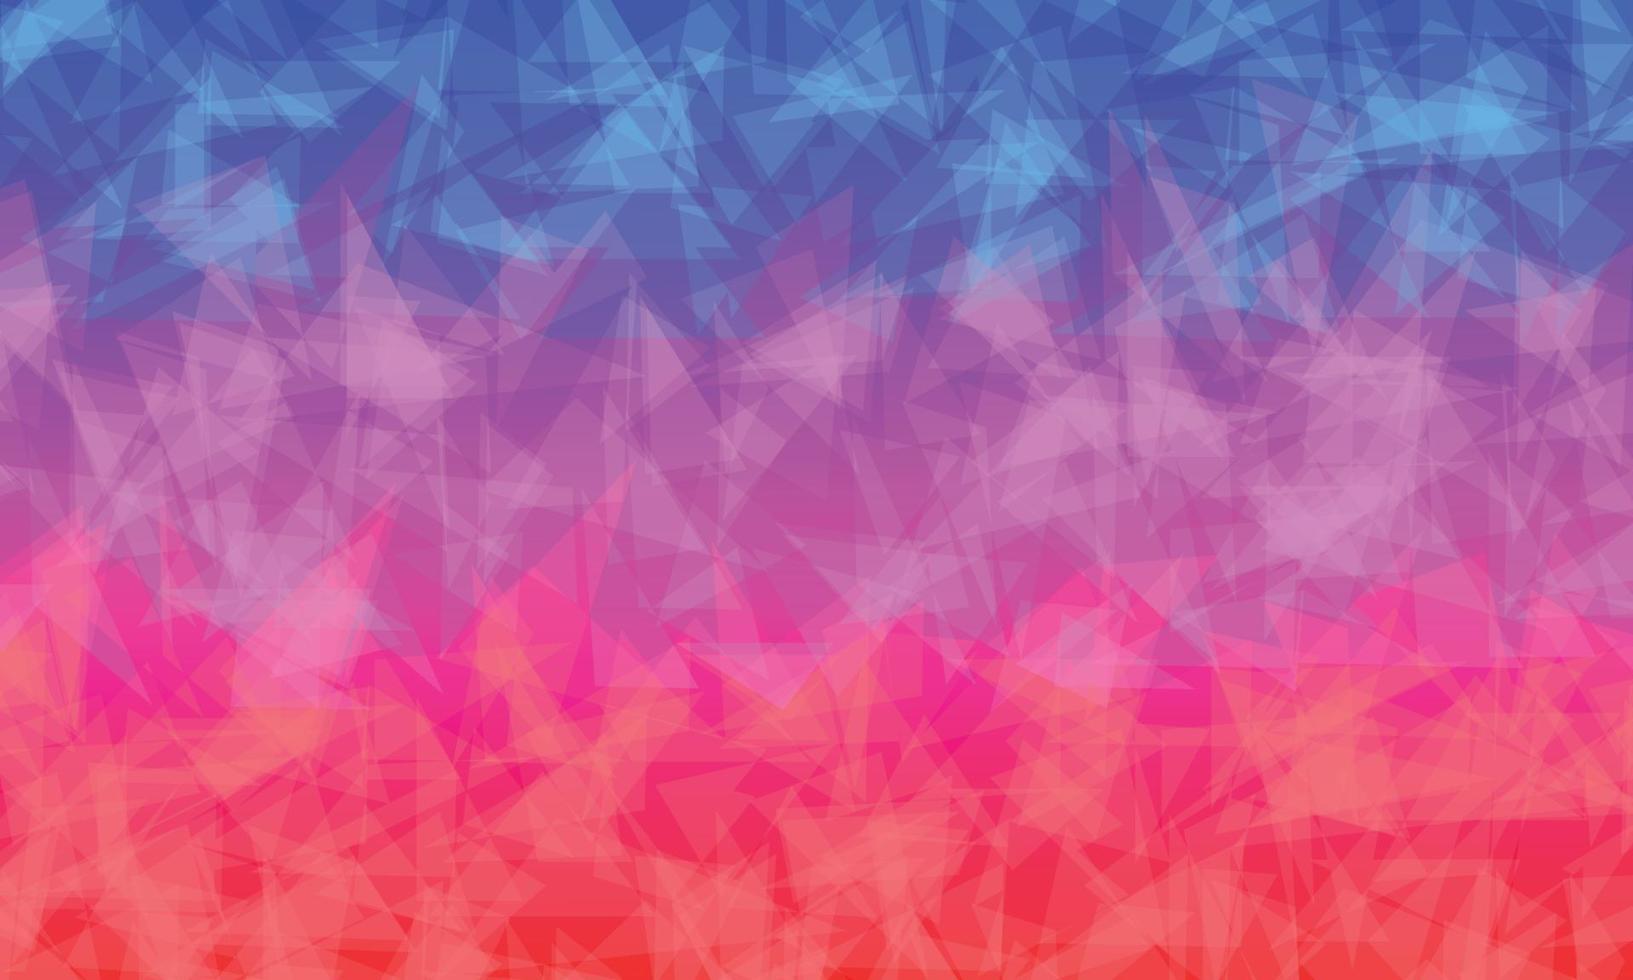 motif polygonal vectoriel bleu clair, rose, rouge.